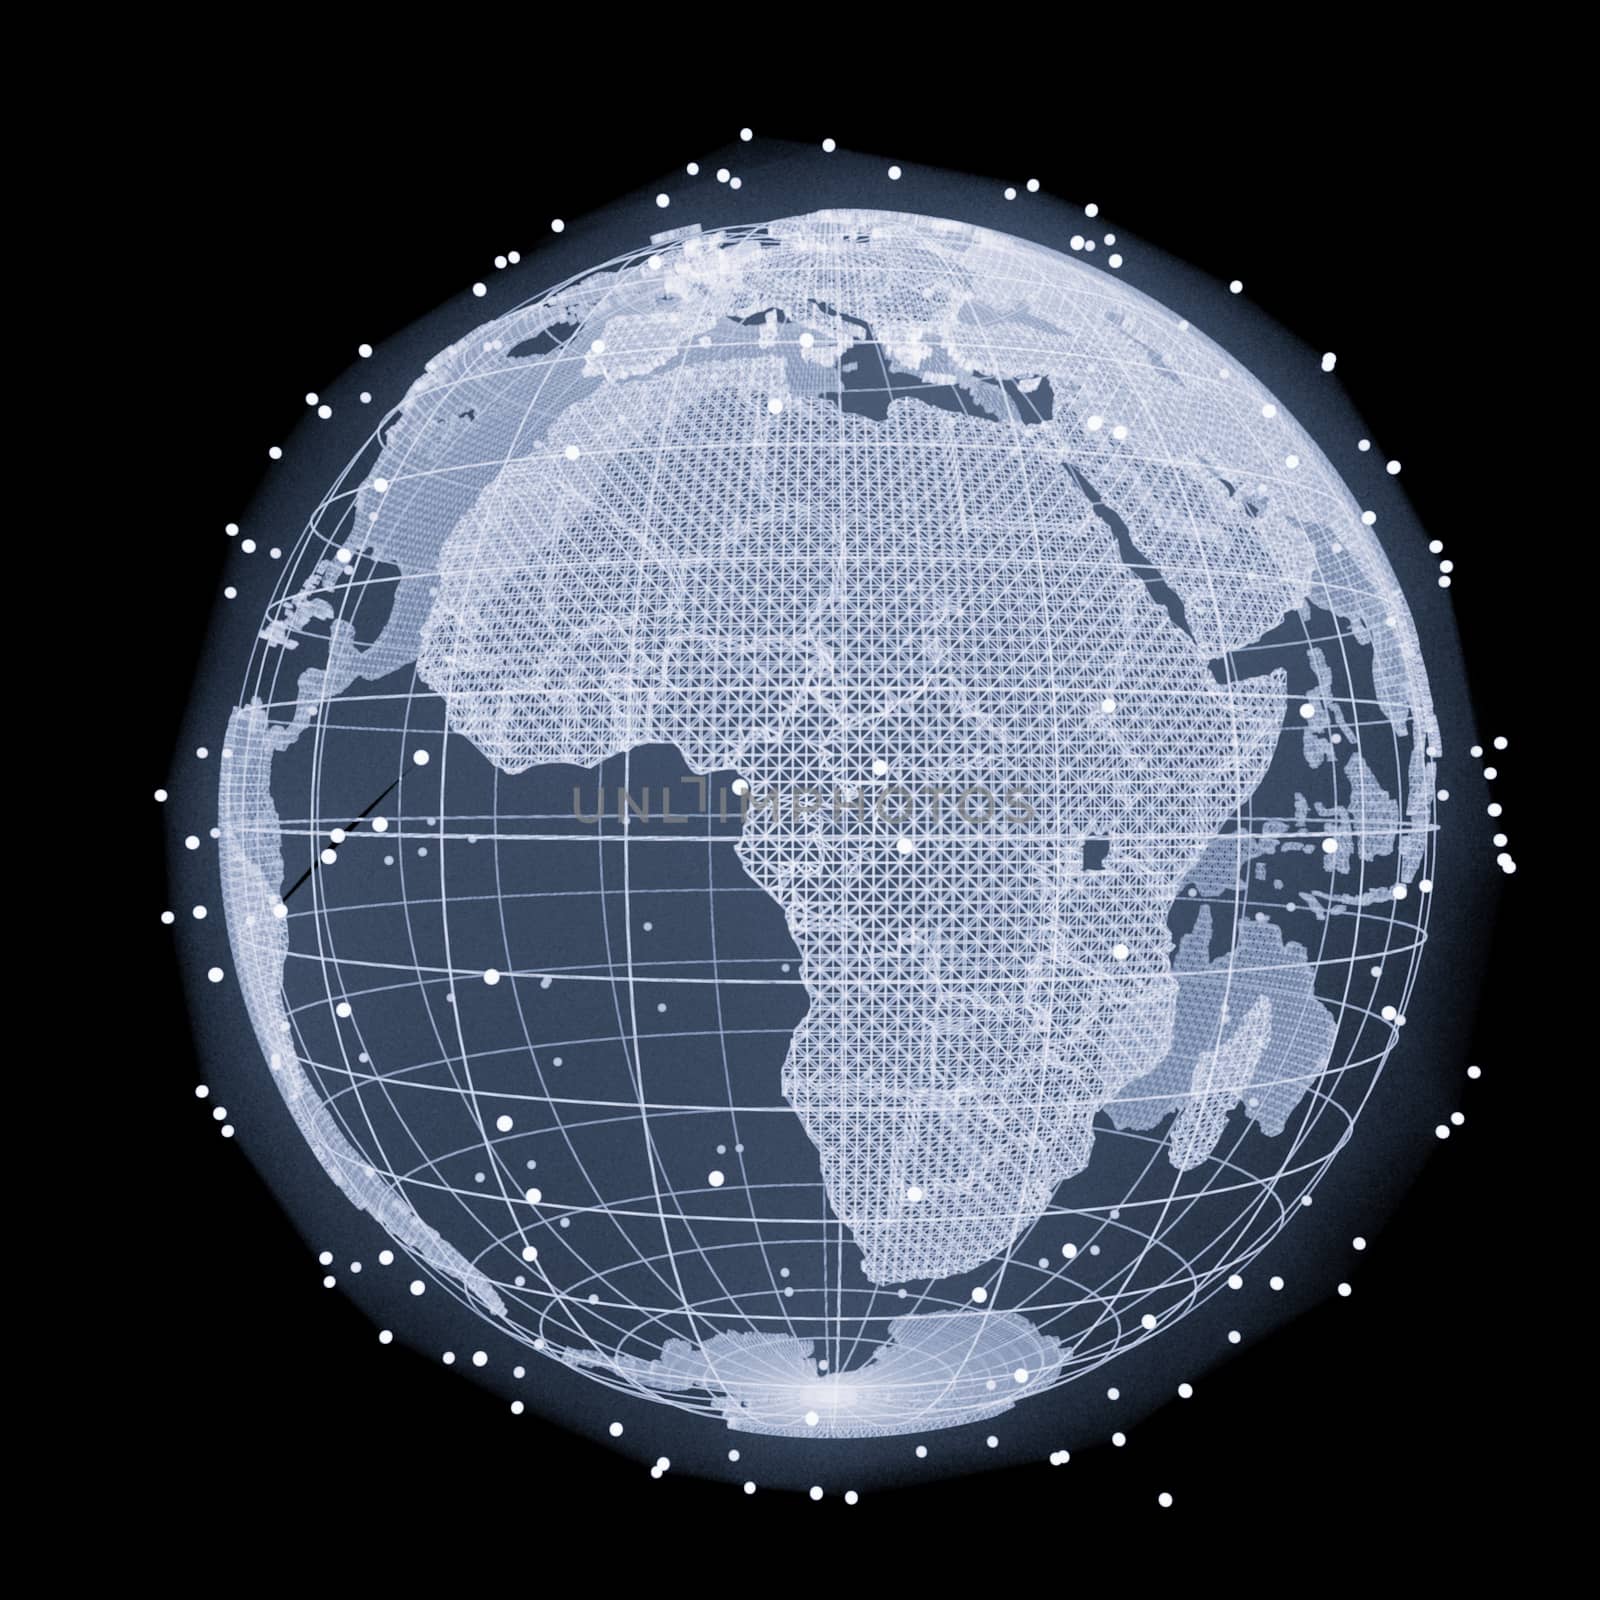 Abstract Telecommunication Earth Map by cherezoff